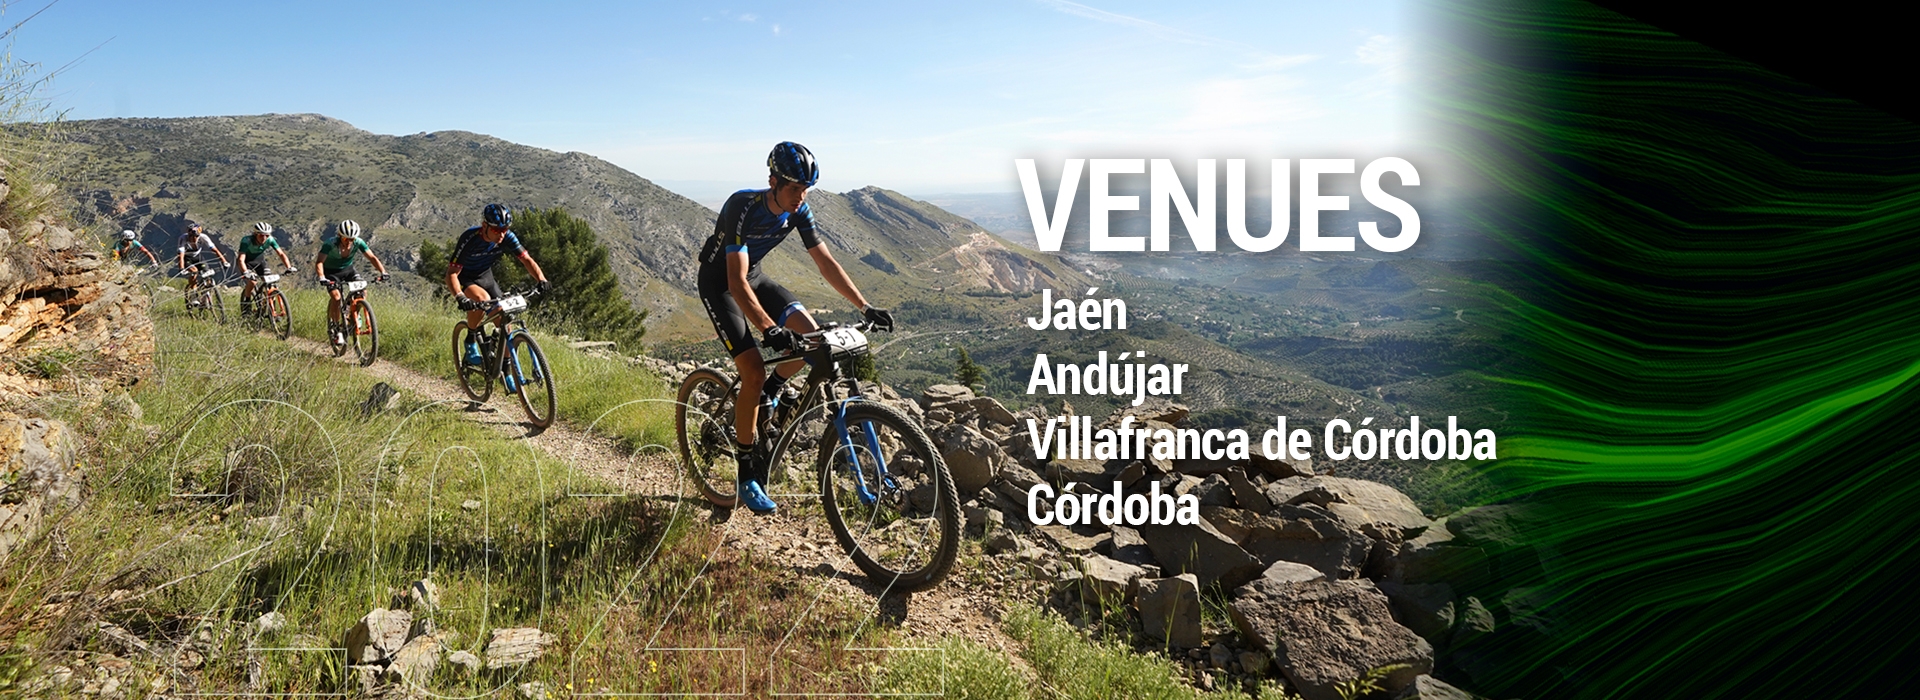 Jaén, Andújar, Villafranca de Córdoba and Córdoba will be the venues for this edition.